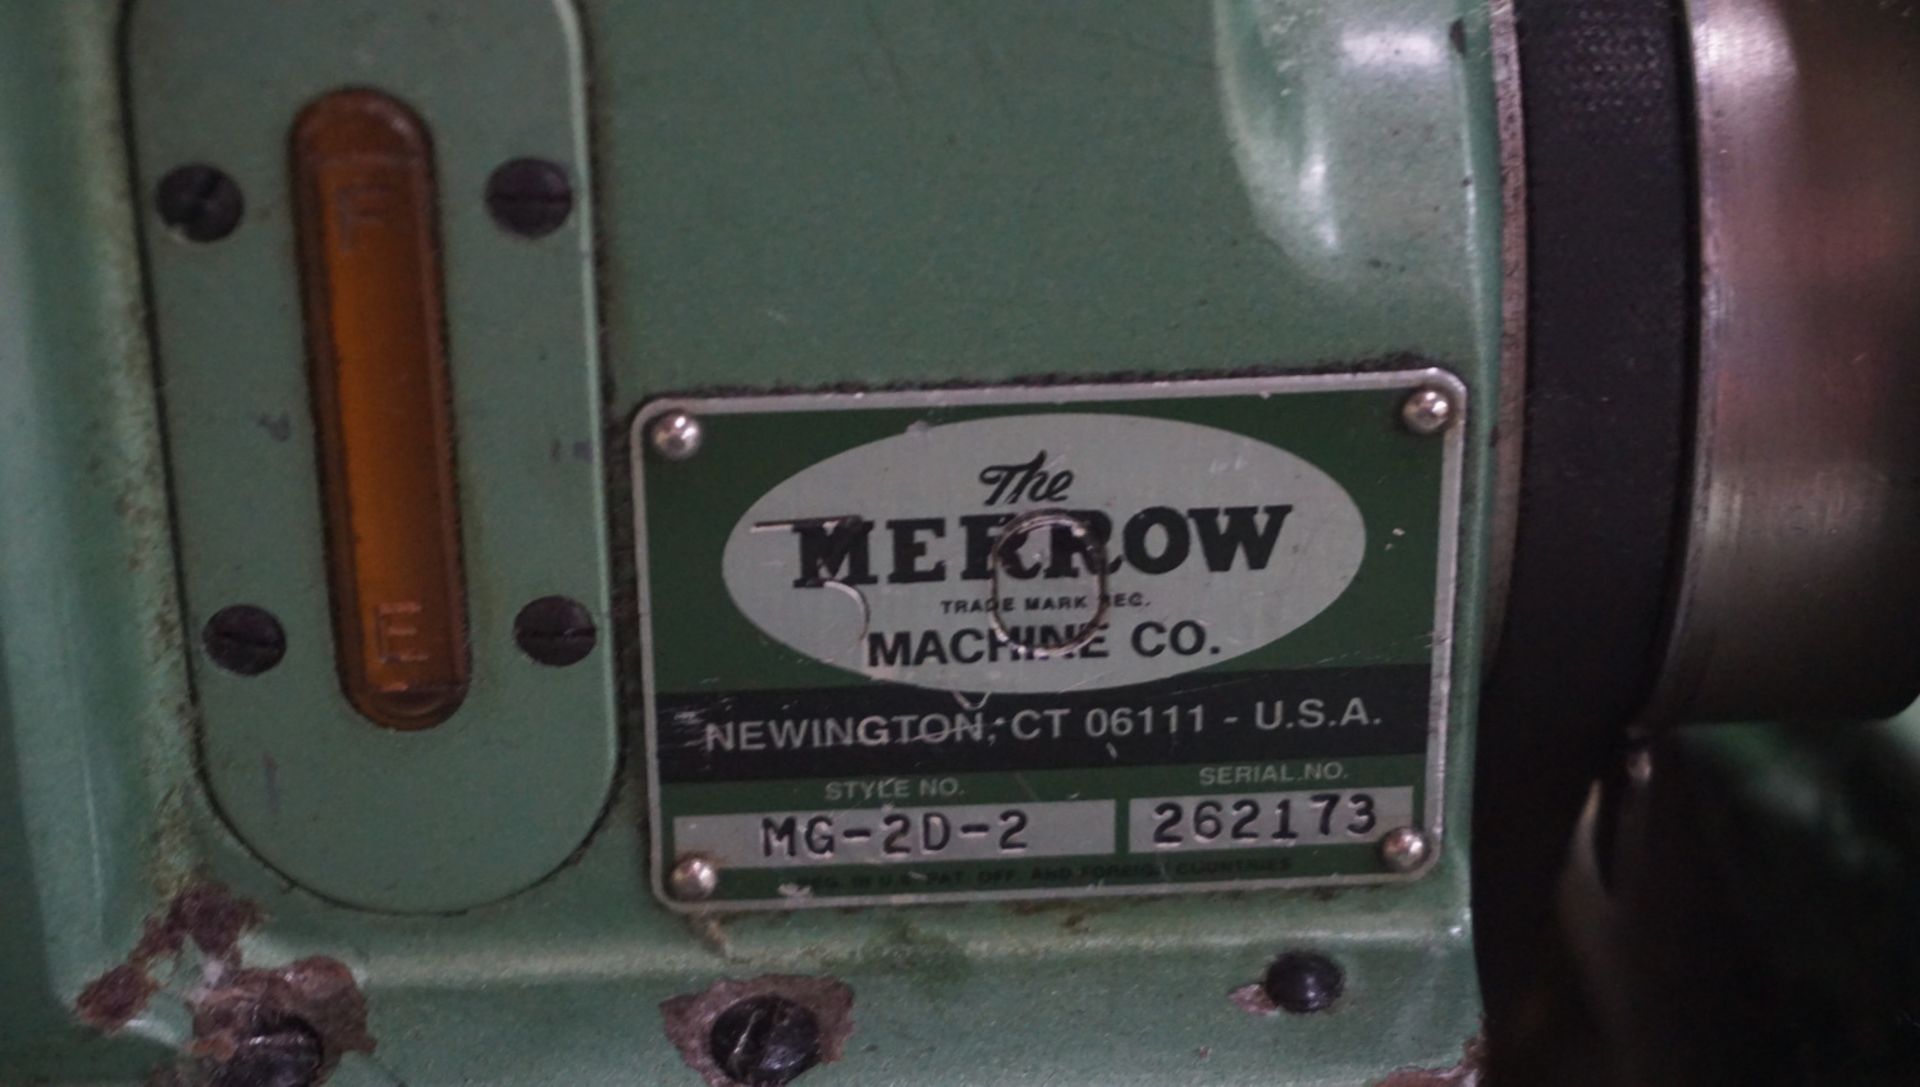 MERROW MG-2D-2 HEM SEWING MACHINE, S/N 262173(110V) - Image 2 of 2